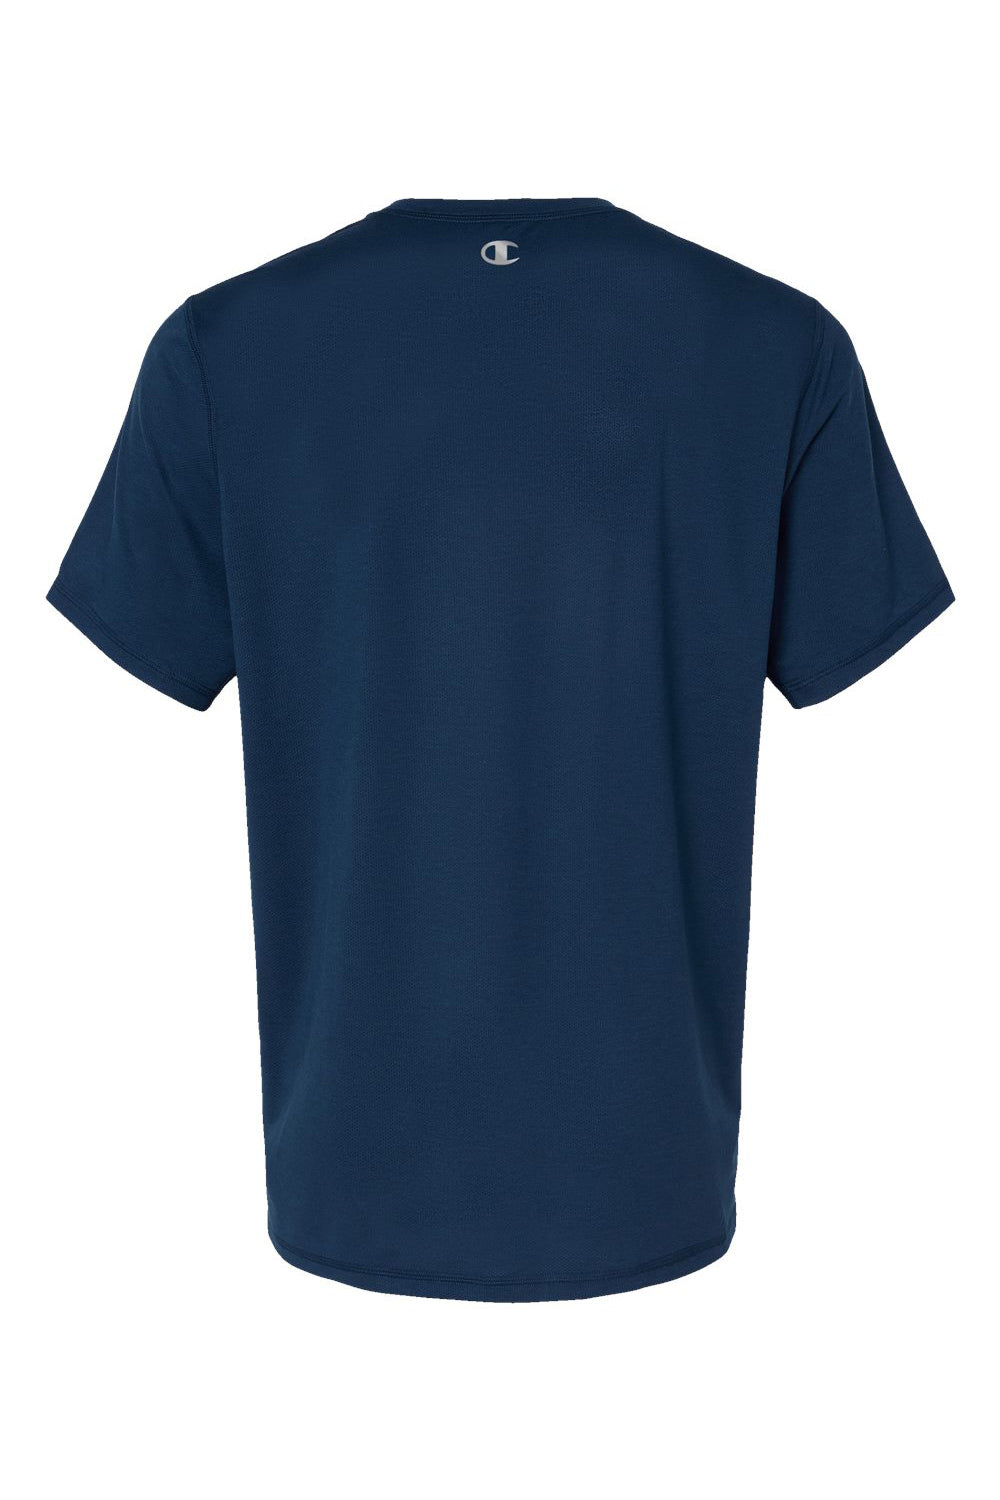 Champion CHP160 Mens Sport Short Sleeve Crewneck T-Shirt Navy Blue Flat Back